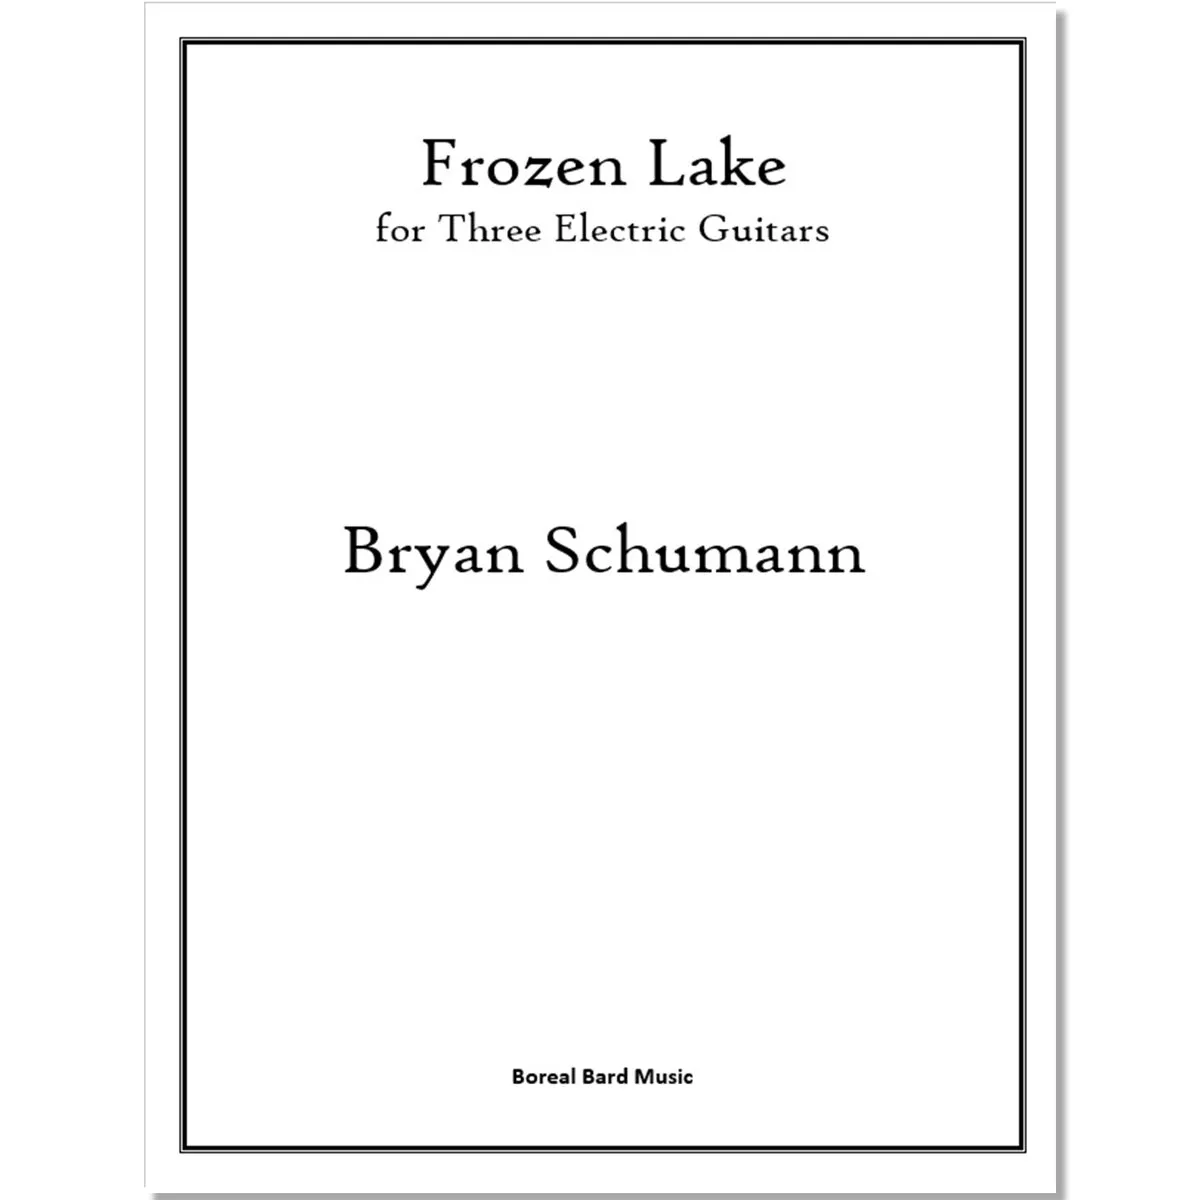 Frozen Lake for Three Electric Guitars (sheet music)